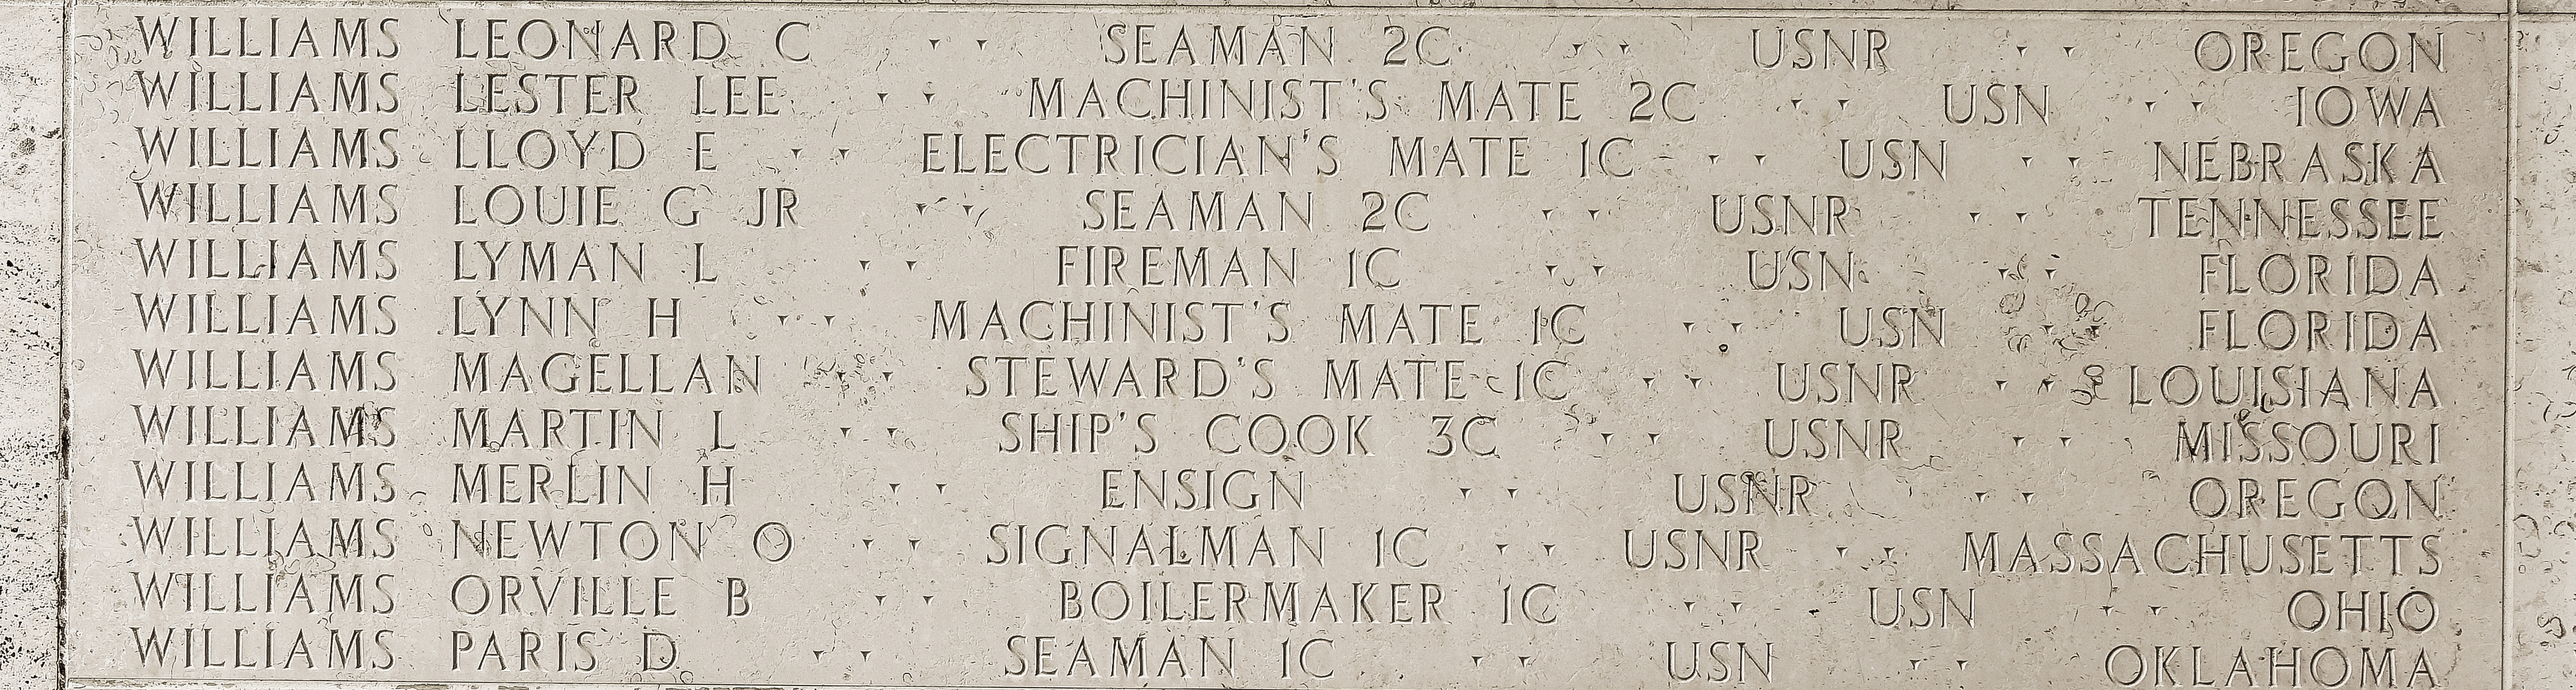 Newton O. Williams, Signalman First Class